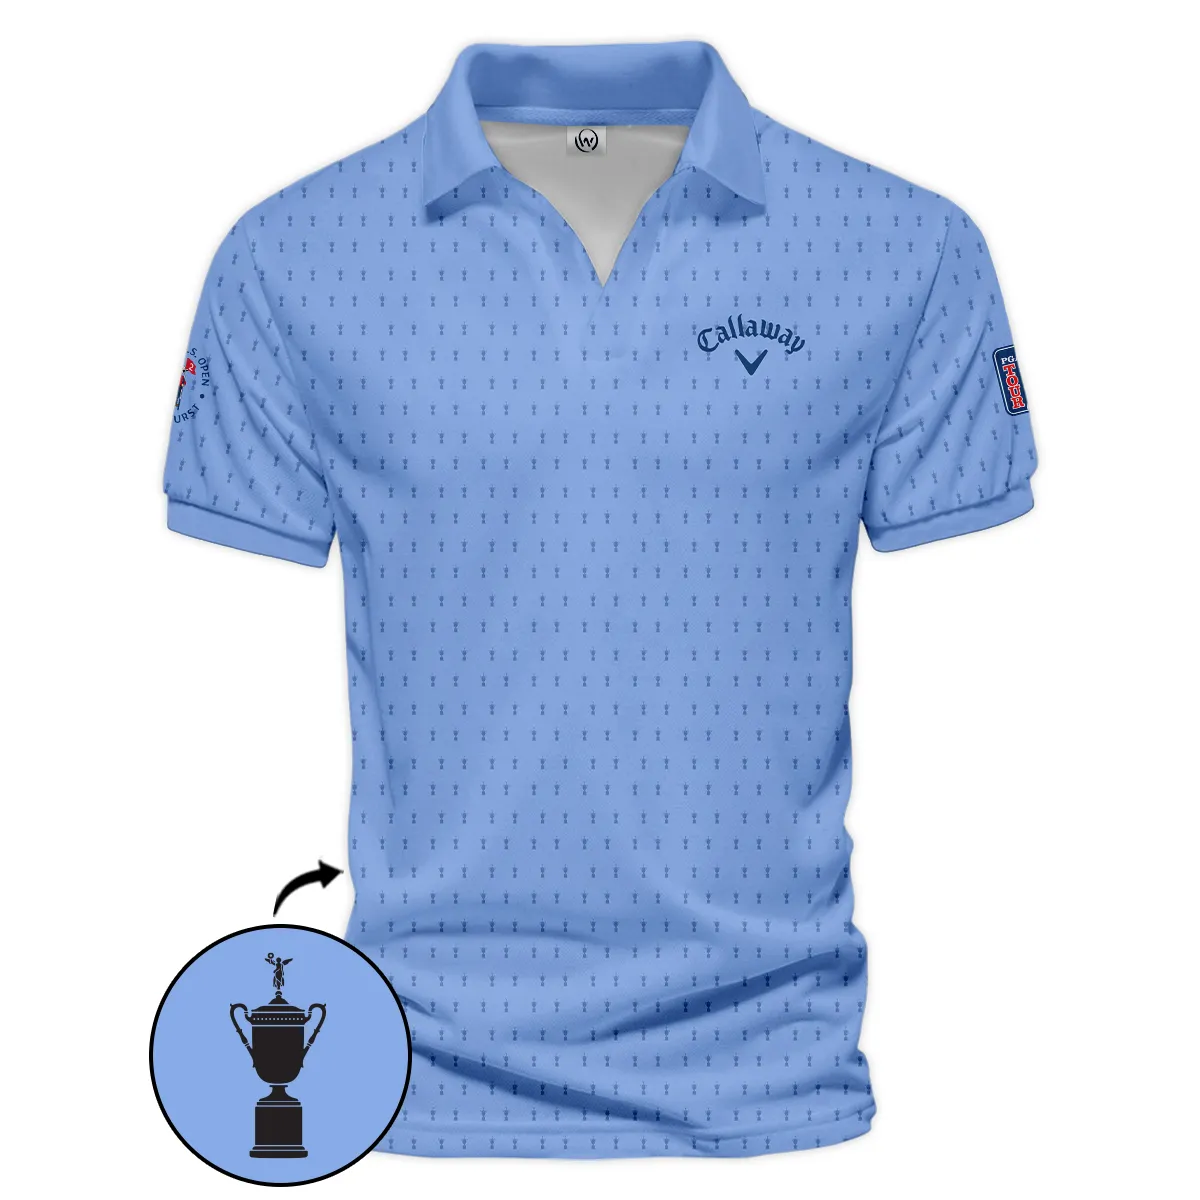 Golf Pattern Cup Blue 124th U.S. Open Pinehurst Pinehurst Callaway Sleeveless Jacket Style Classic